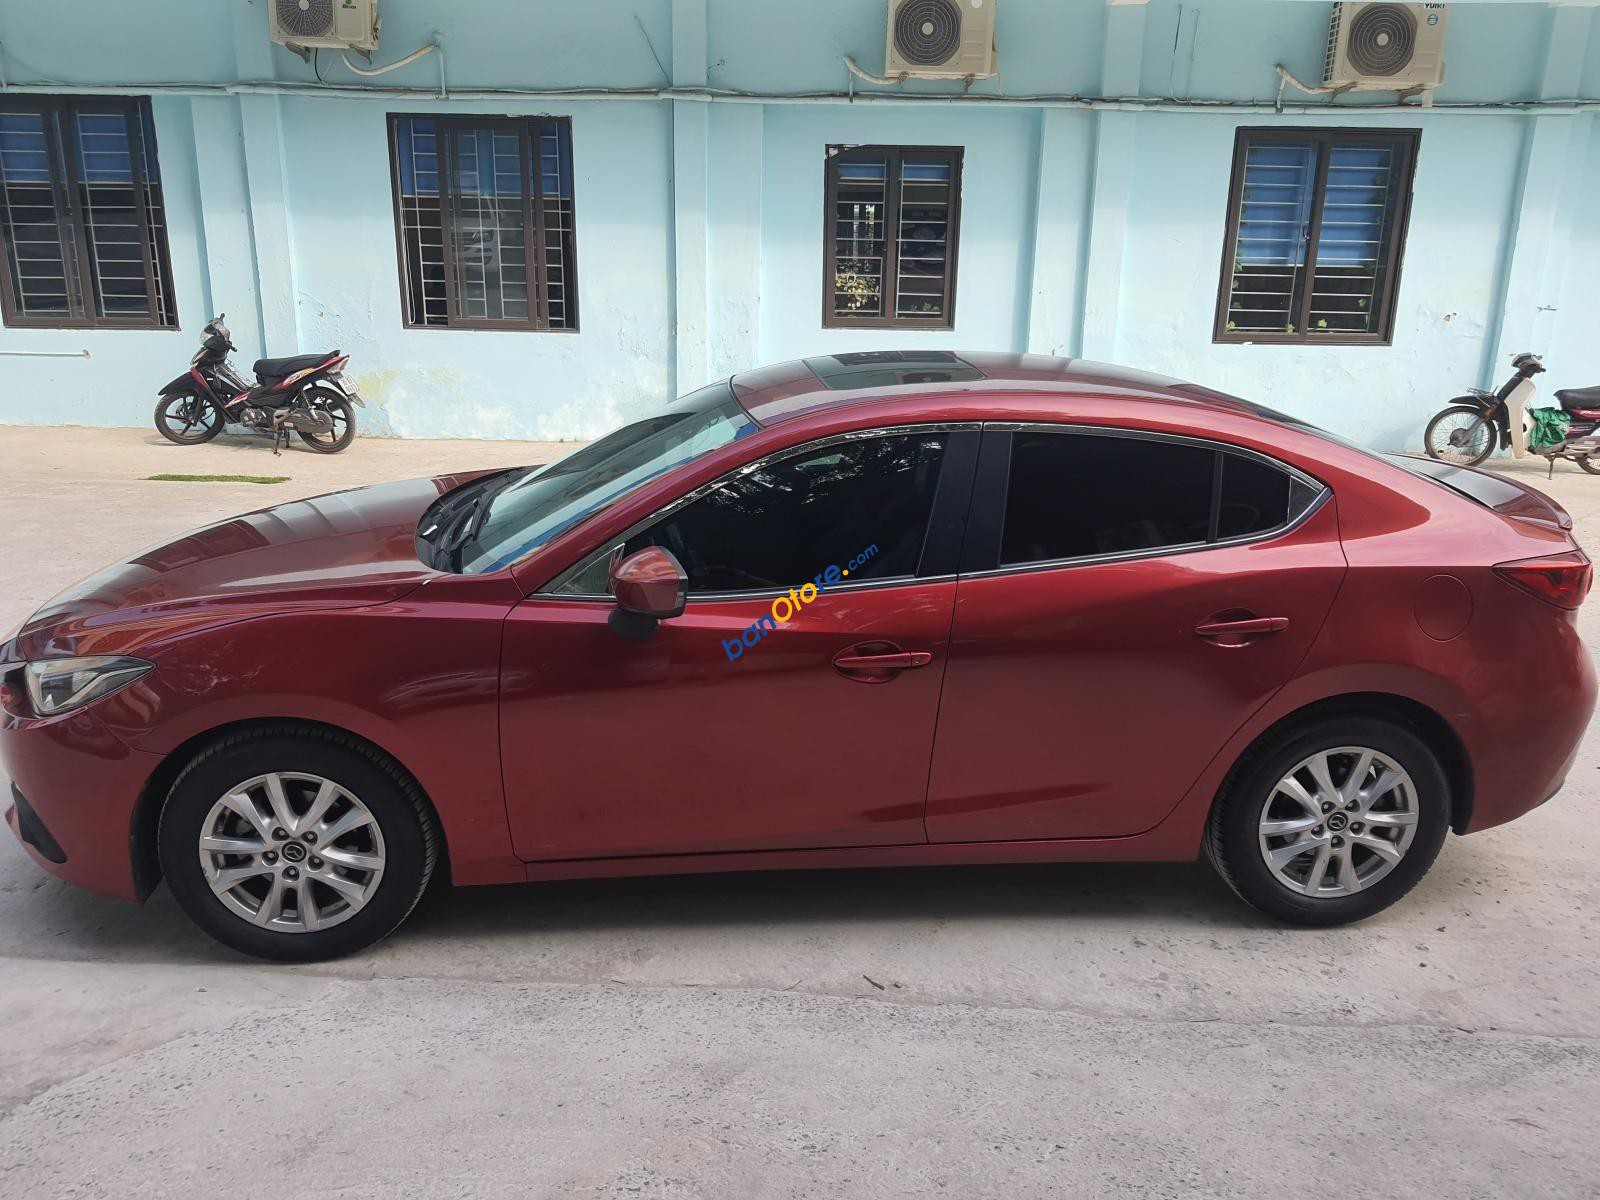 Mazda 3 2015 - Màu đỏ, giá 460tr